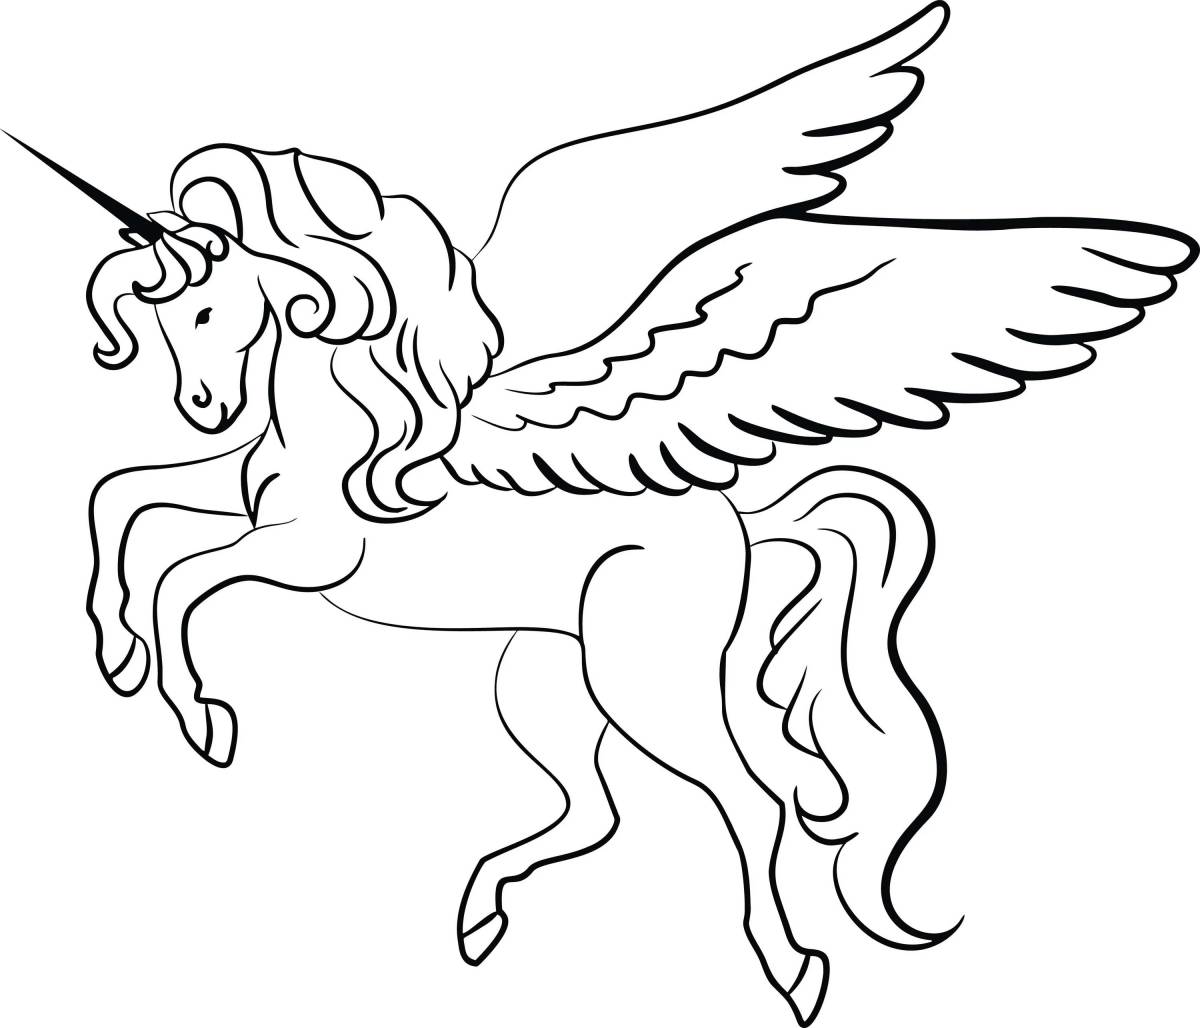 How to draw a unicorn #1